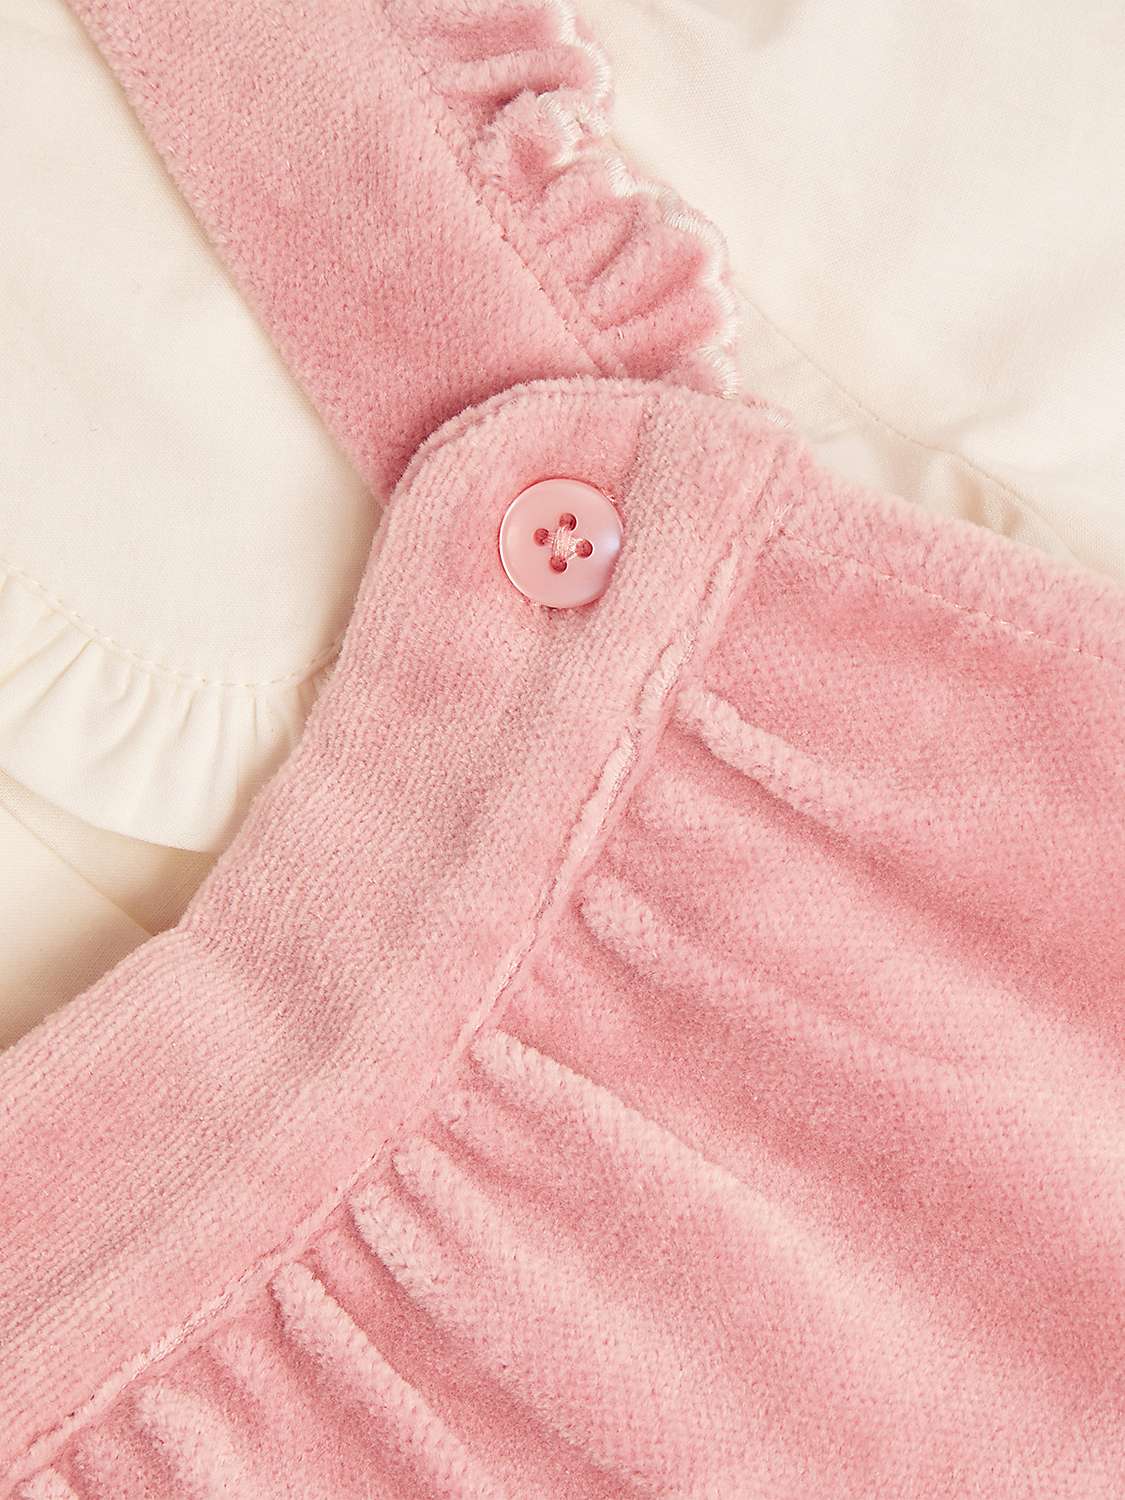 Buy Monsoon Baby Cotton Velour Jumpsuit & Blouse Set, Pink Online at johnlewis.com